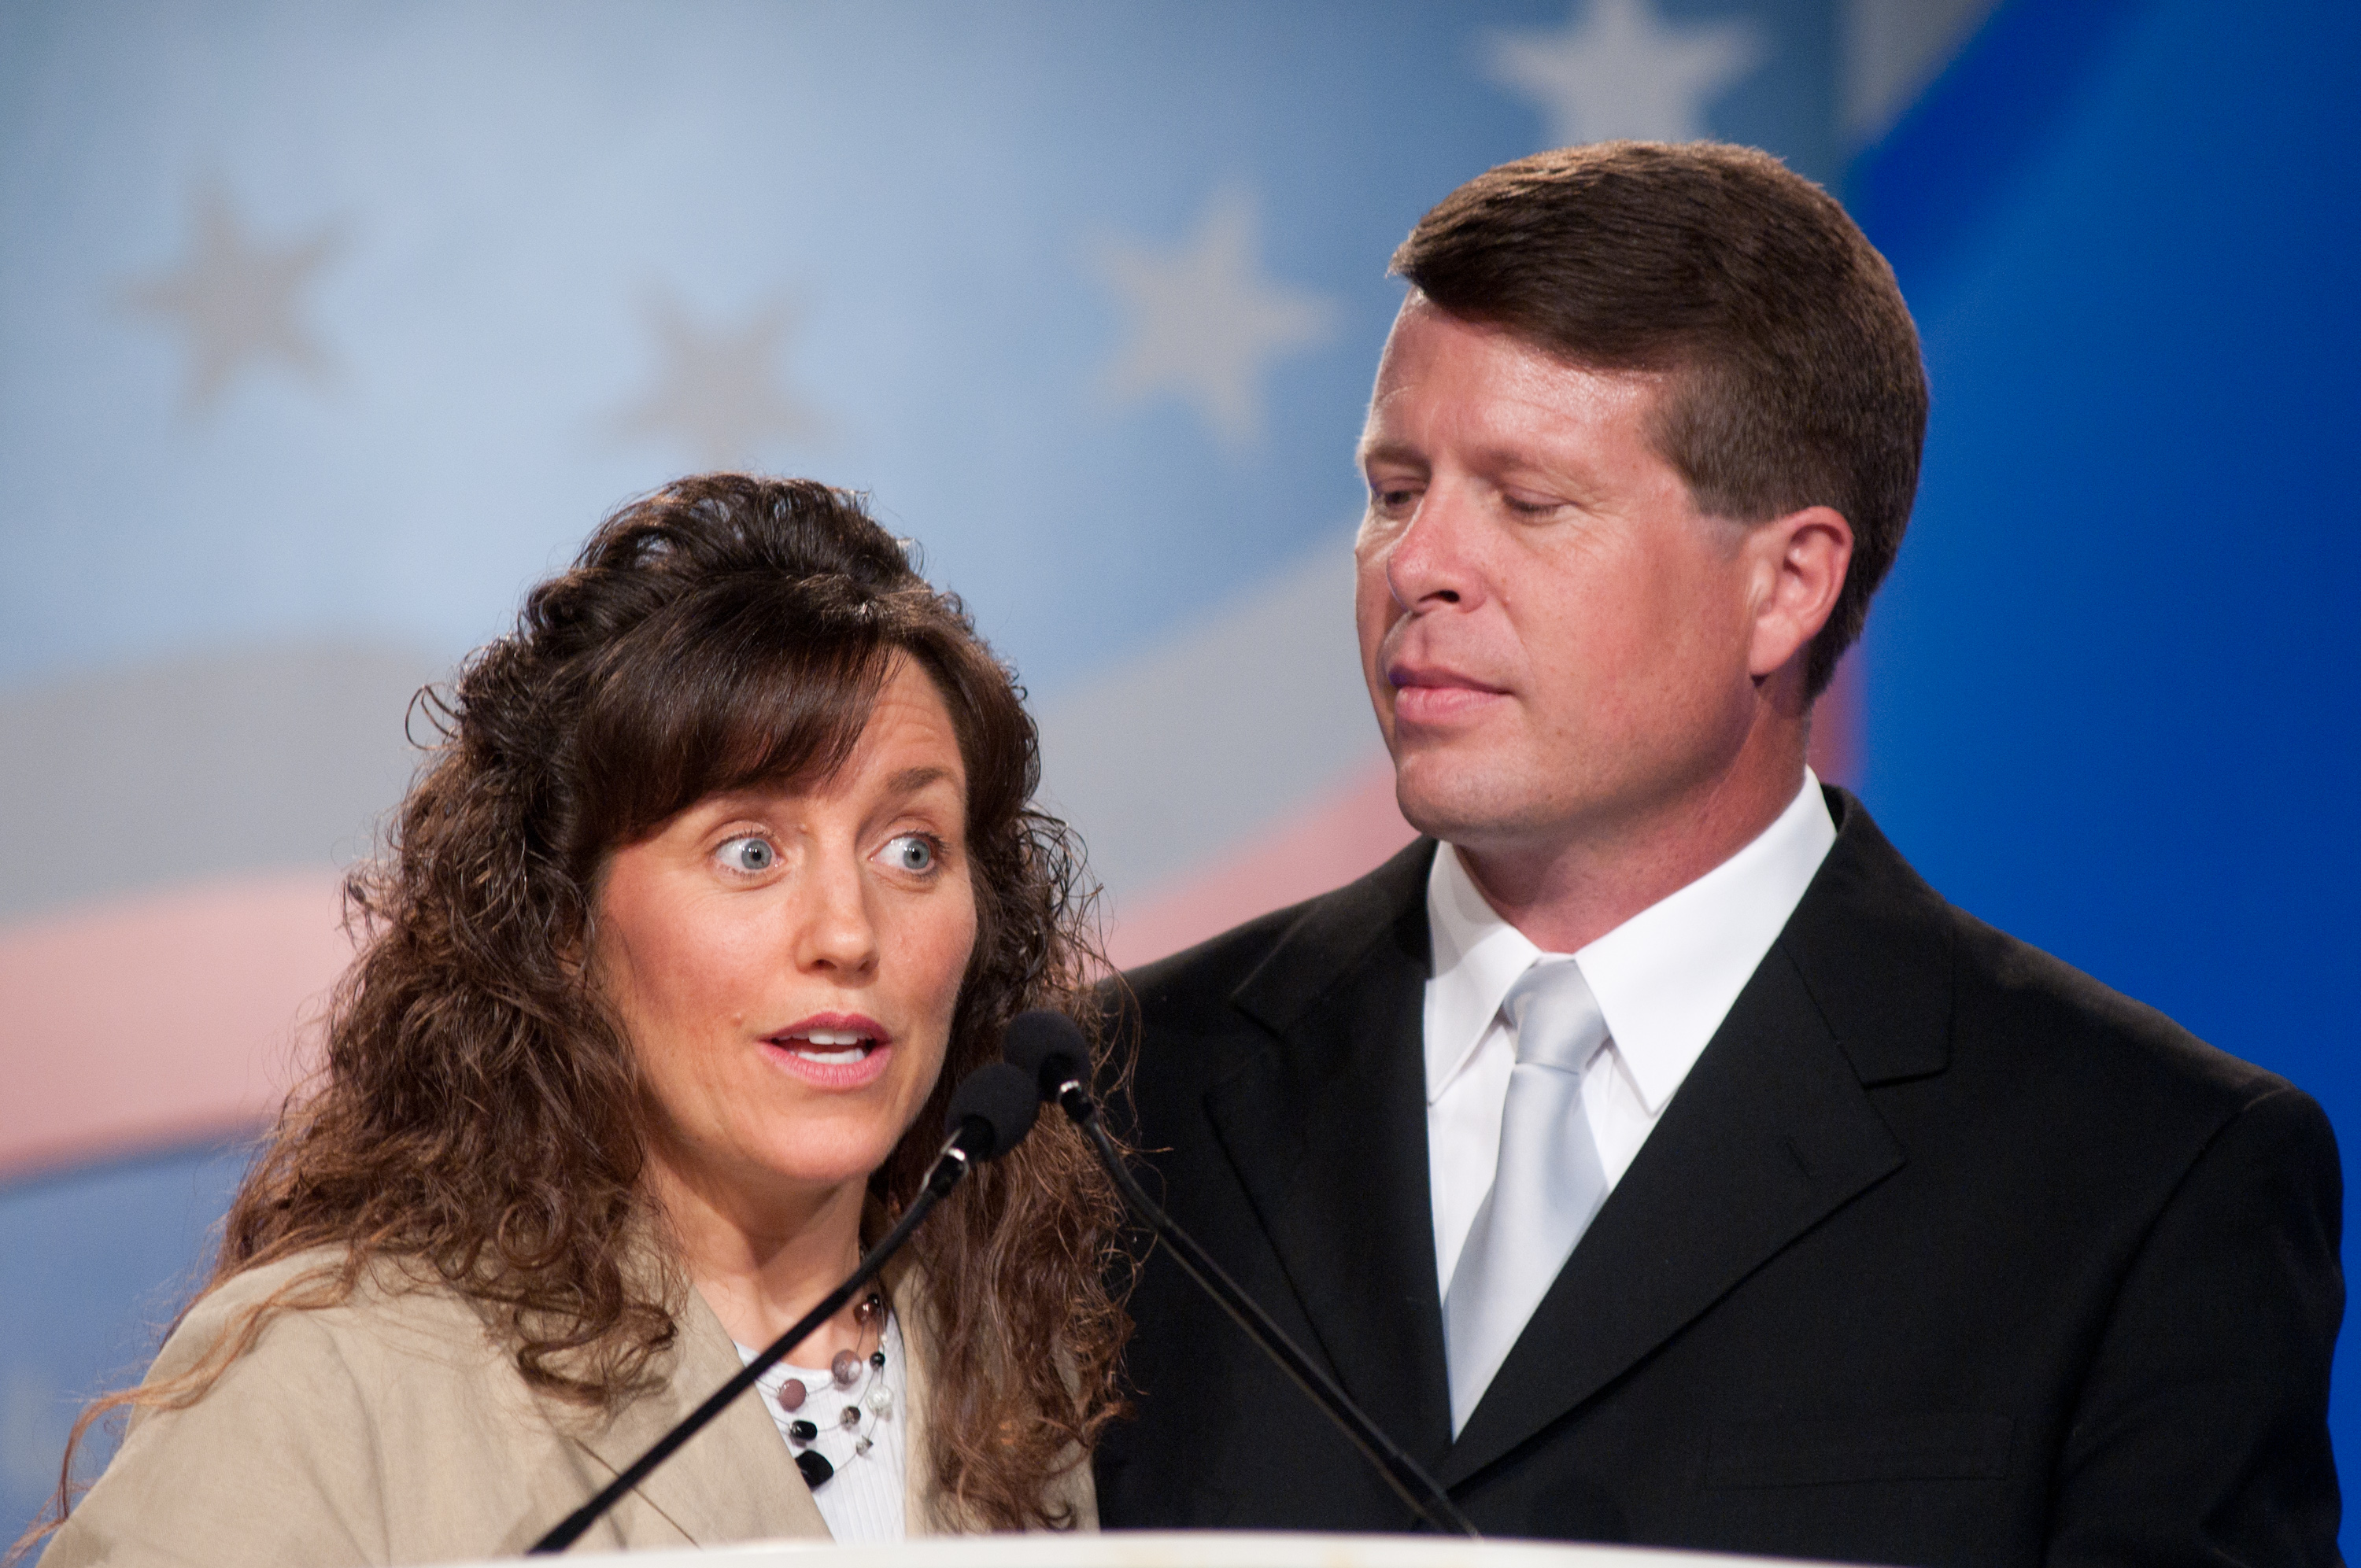 Michelle Duggar and Jim Bob Duggar in Washington in 2010 | Source: Getty Images